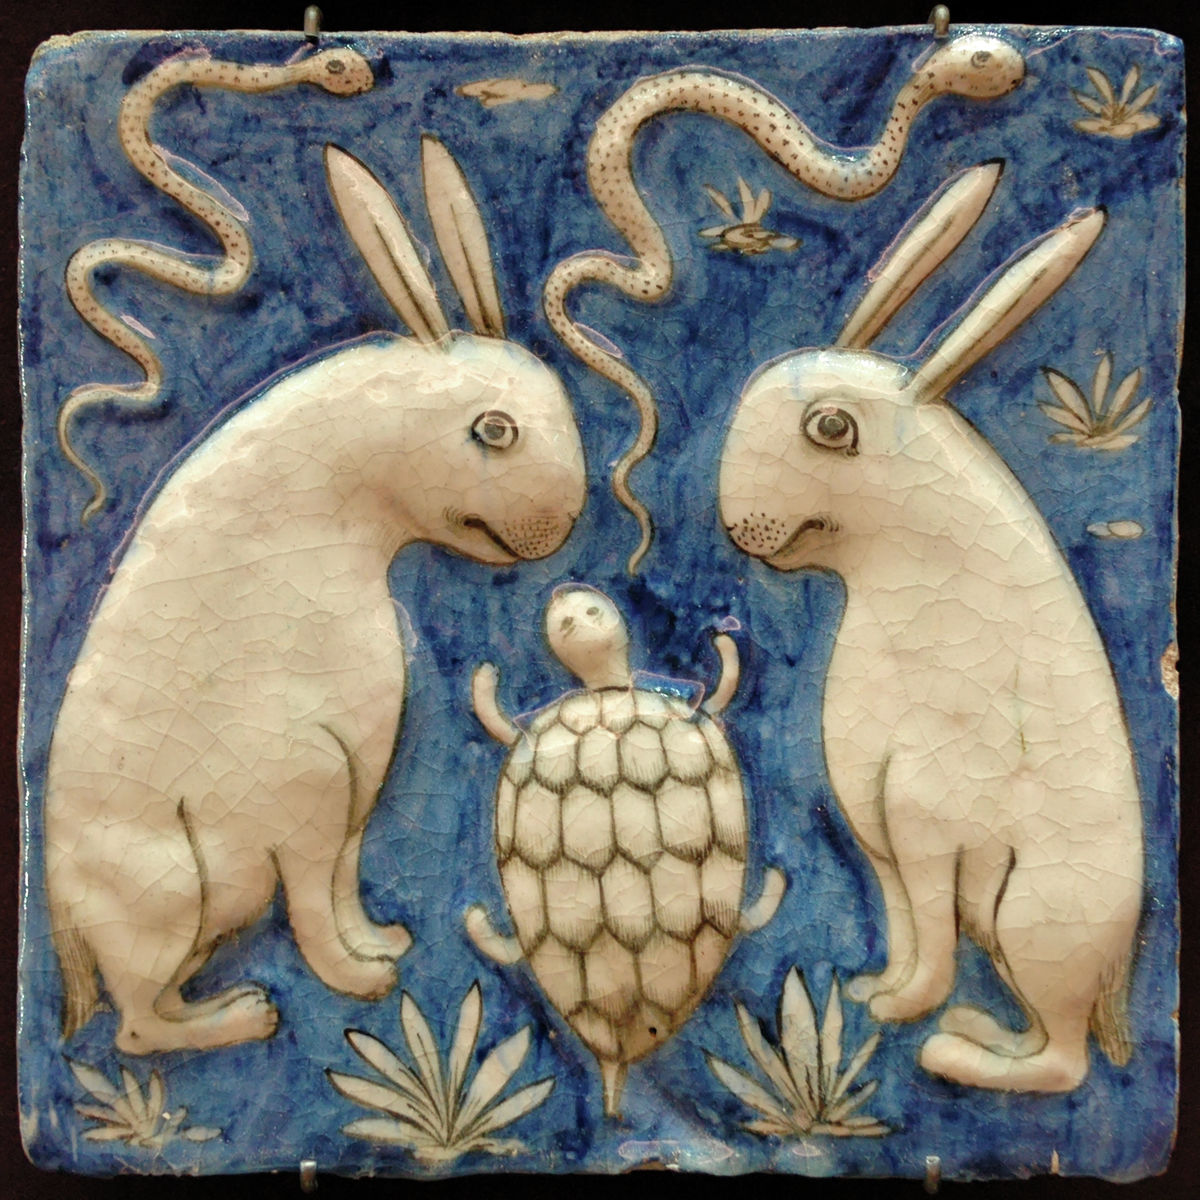 Rabbits and Tortoise - 19th Century